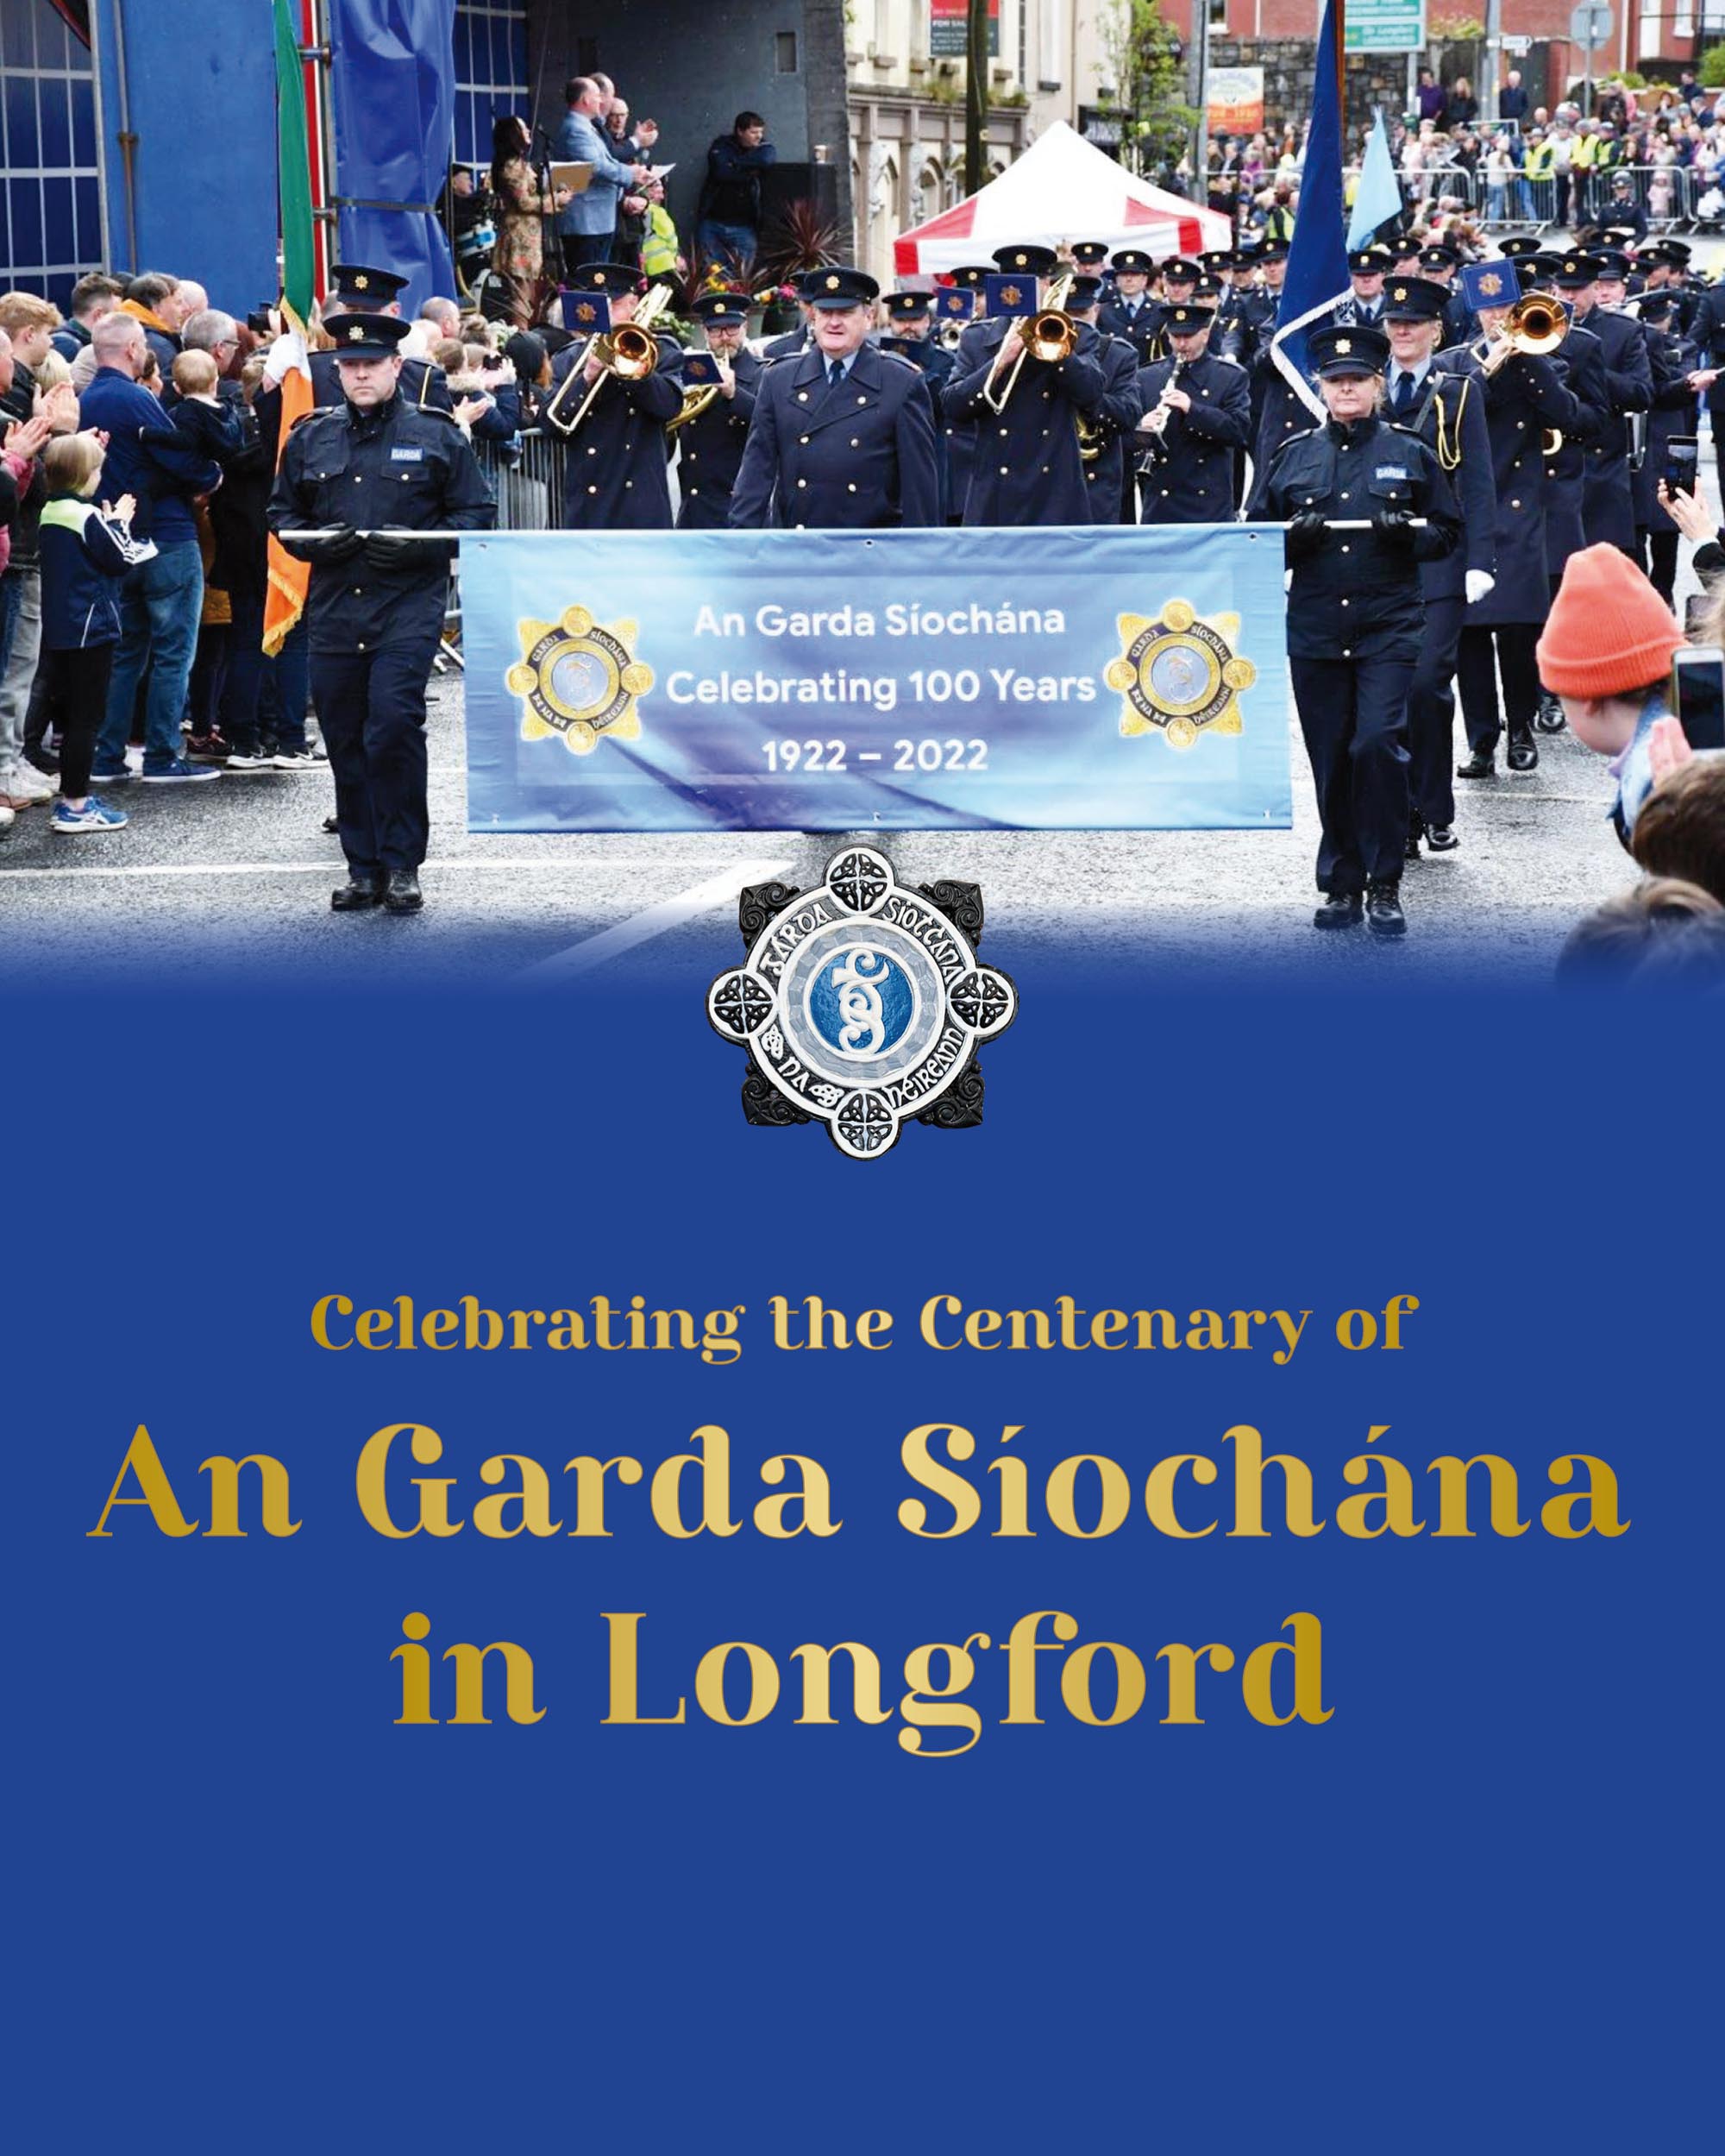 Celebrating the History of An Garda Síochána in Longford